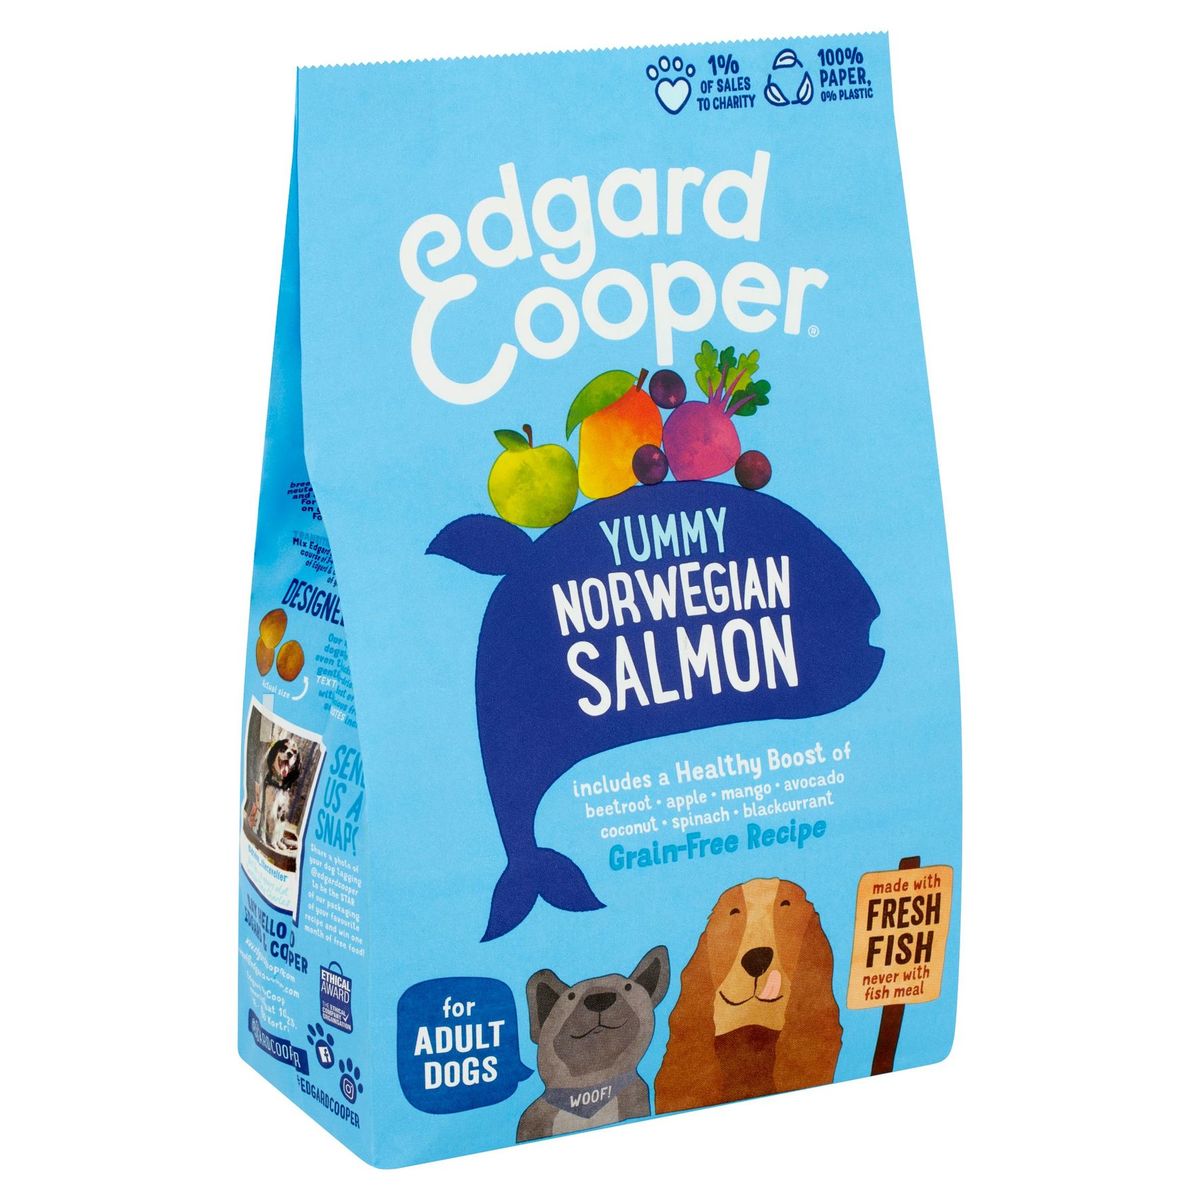 Edgard & Cooper Yummy Norwegian Salmon 1 kg